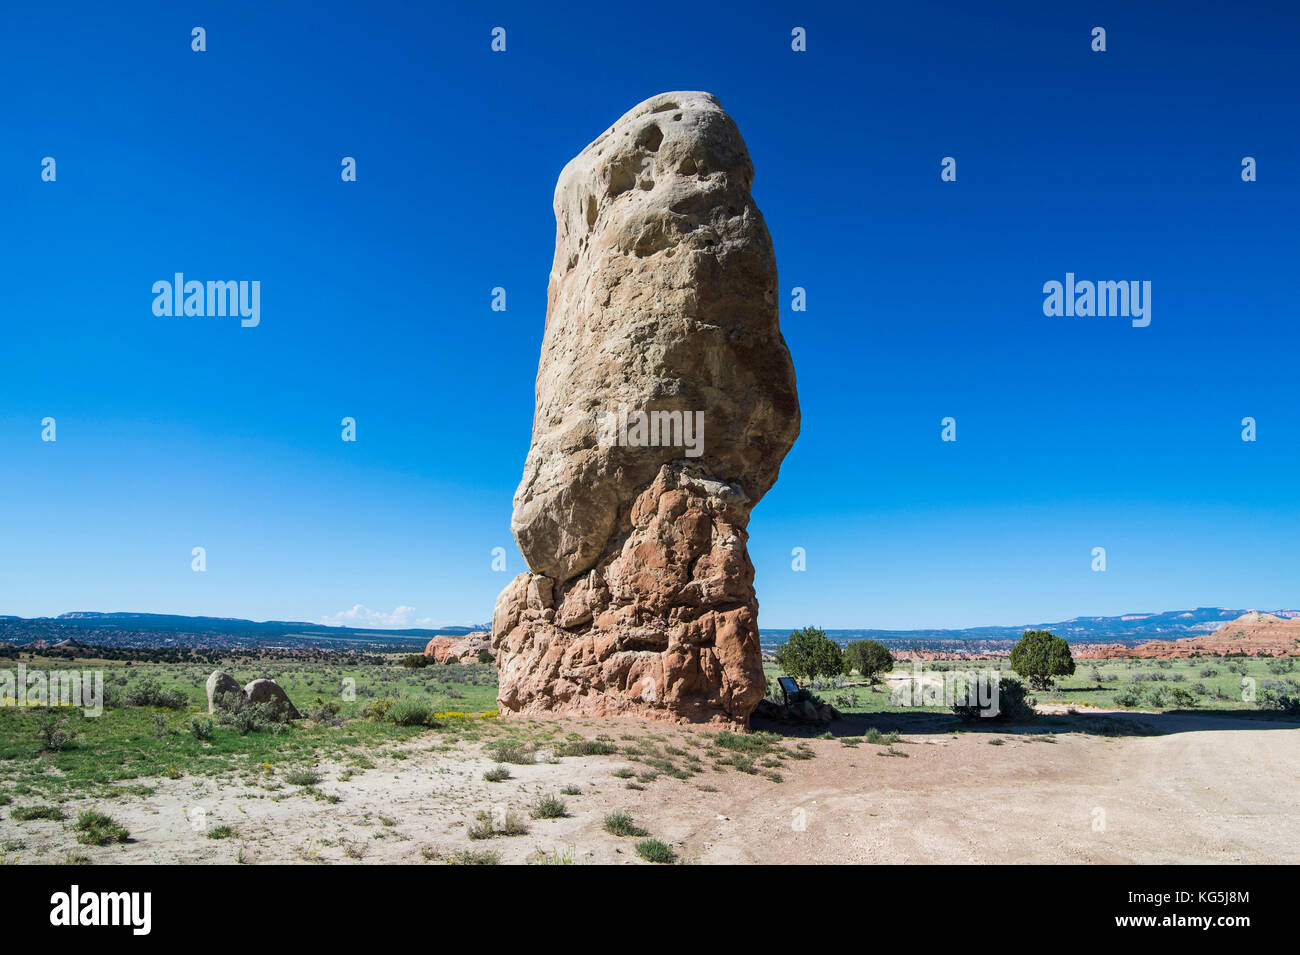 Chimney rock presso il bacino kodakchrome parco statale, Utah, Stati Uniti d'America Foto Stock